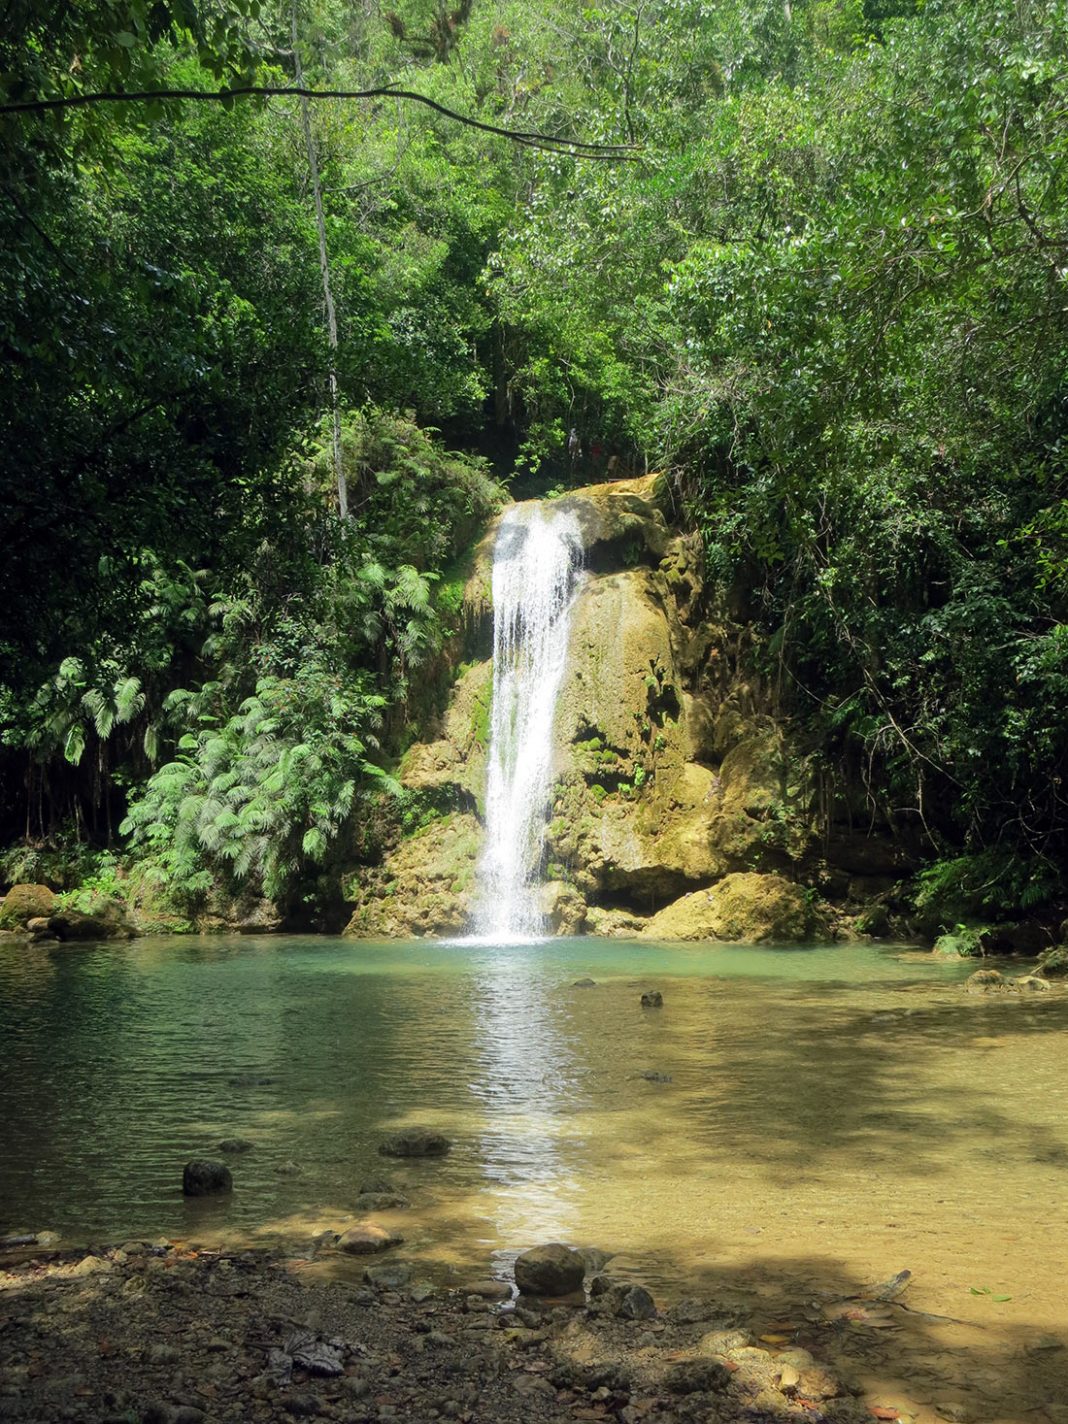 natural tourist attractions in dominican republic